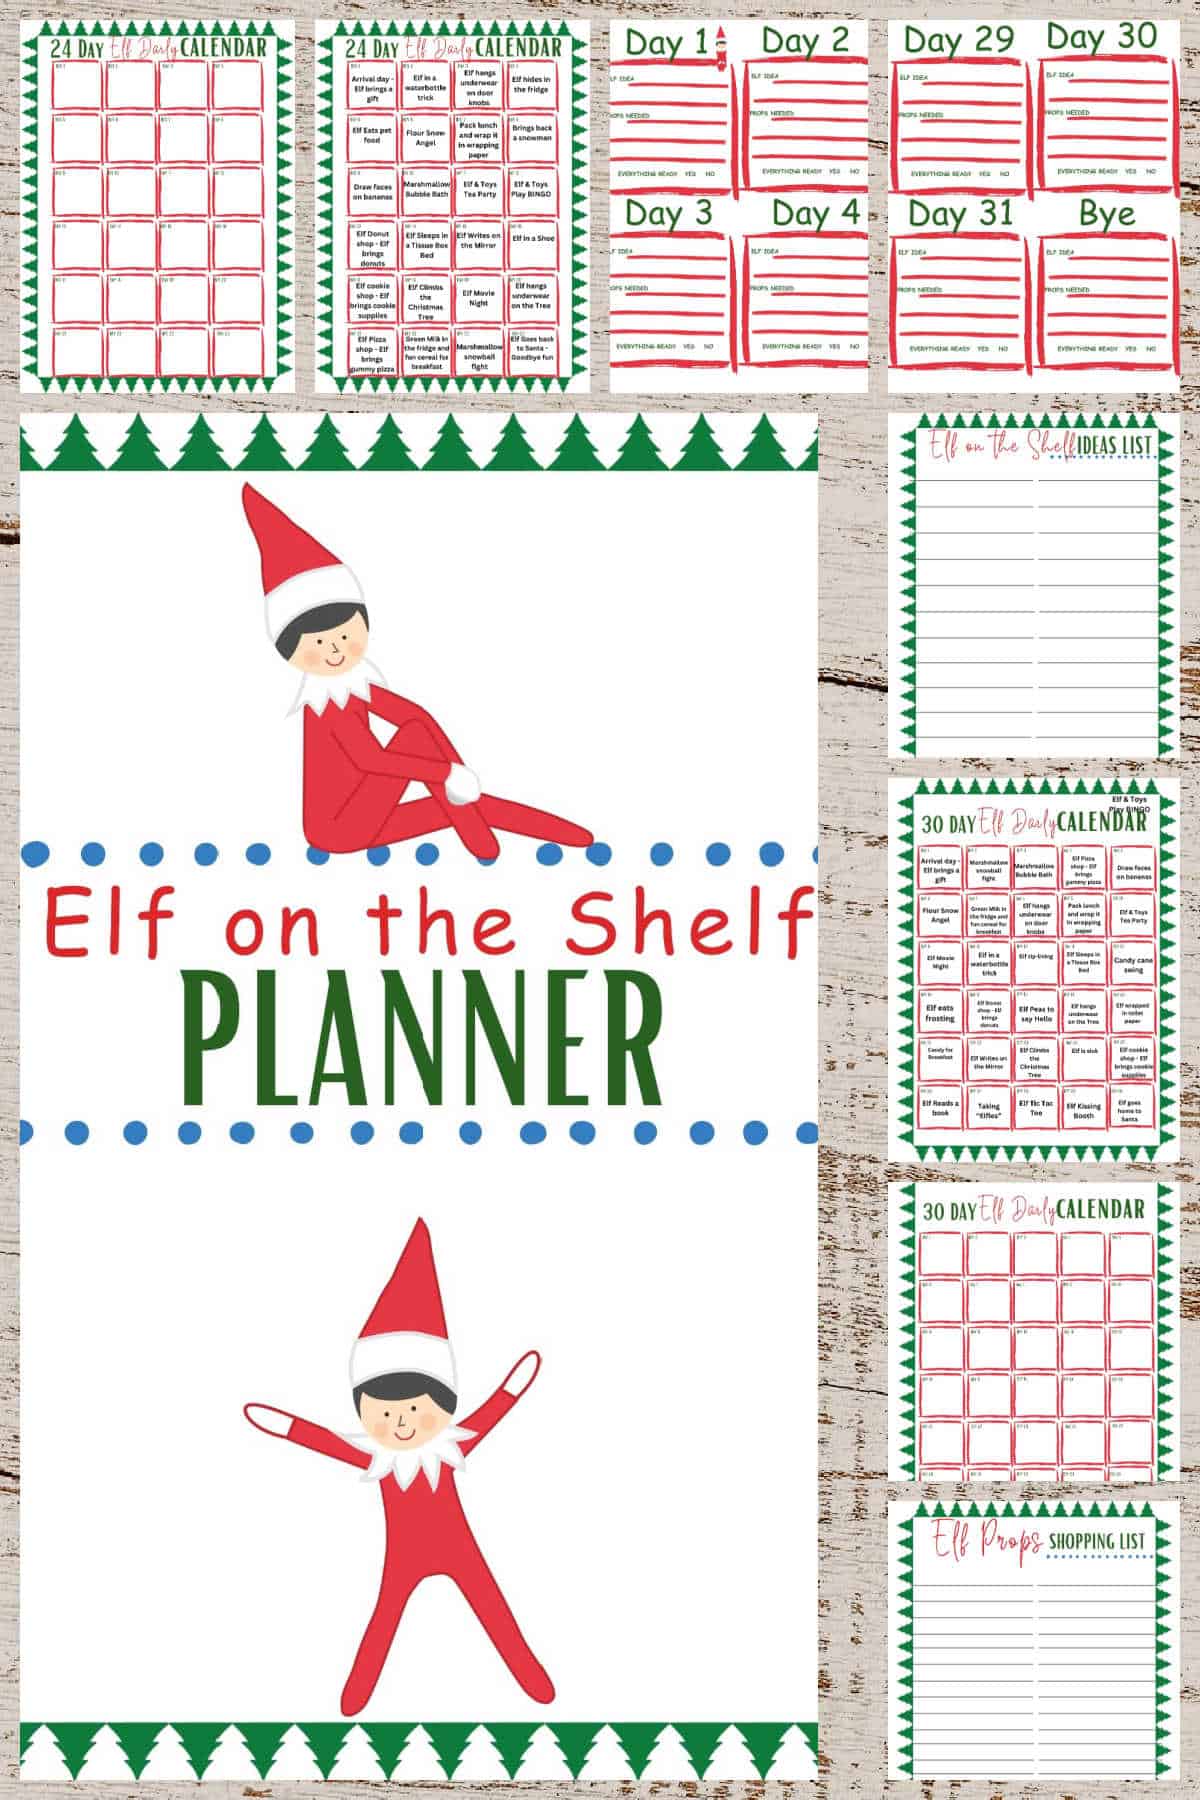 Elf on the shelf planner.